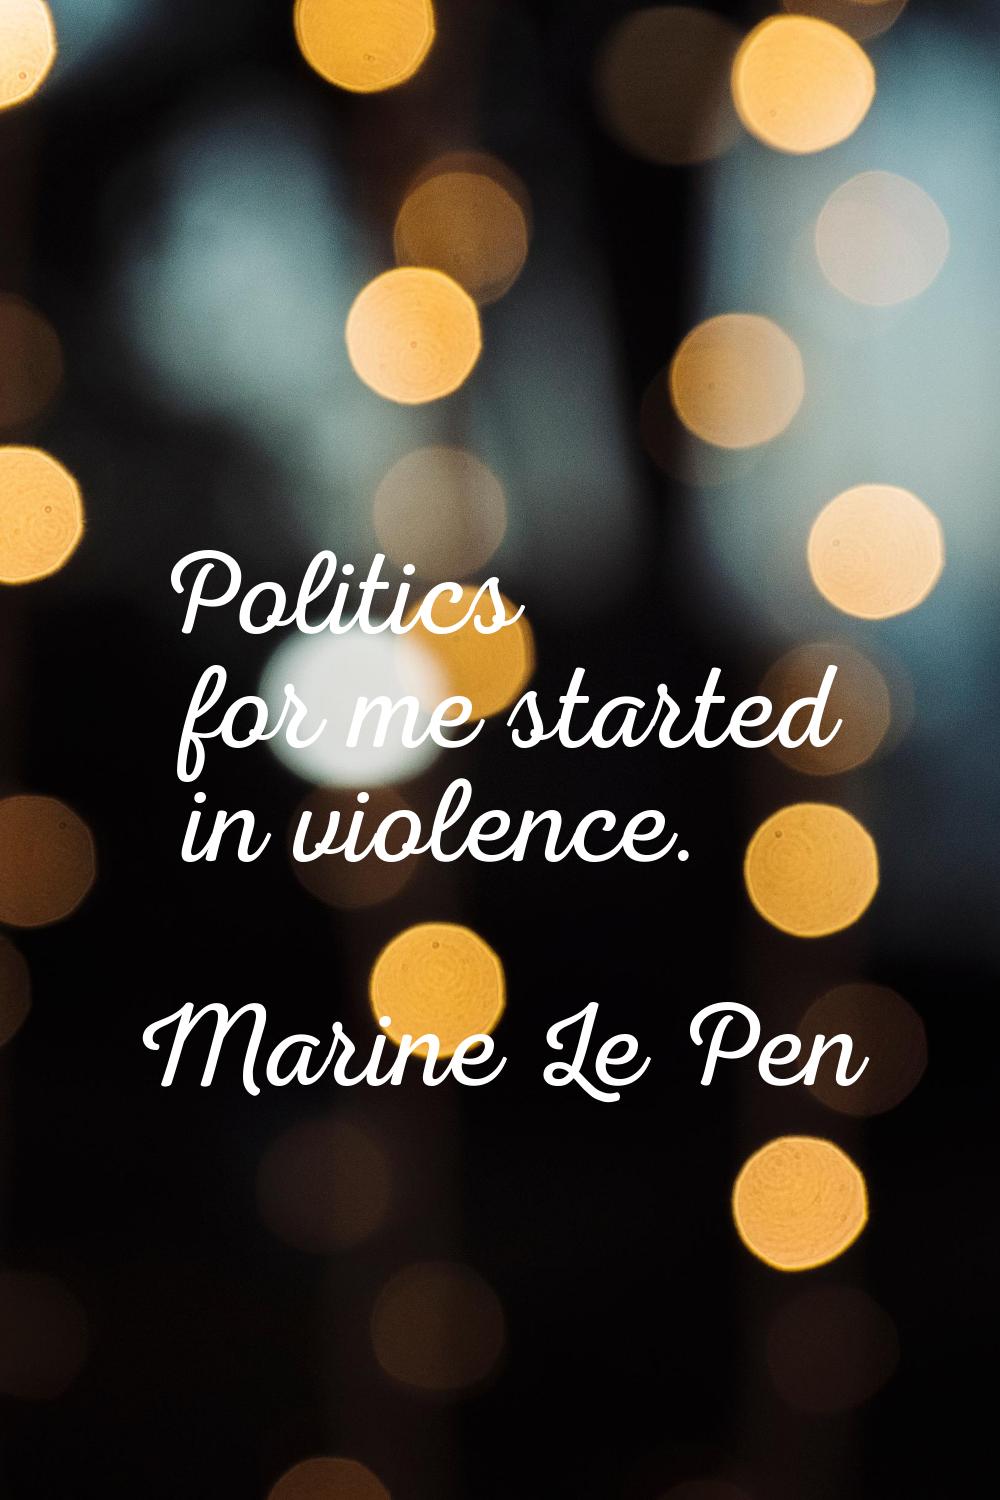 Politics for me started in violence.